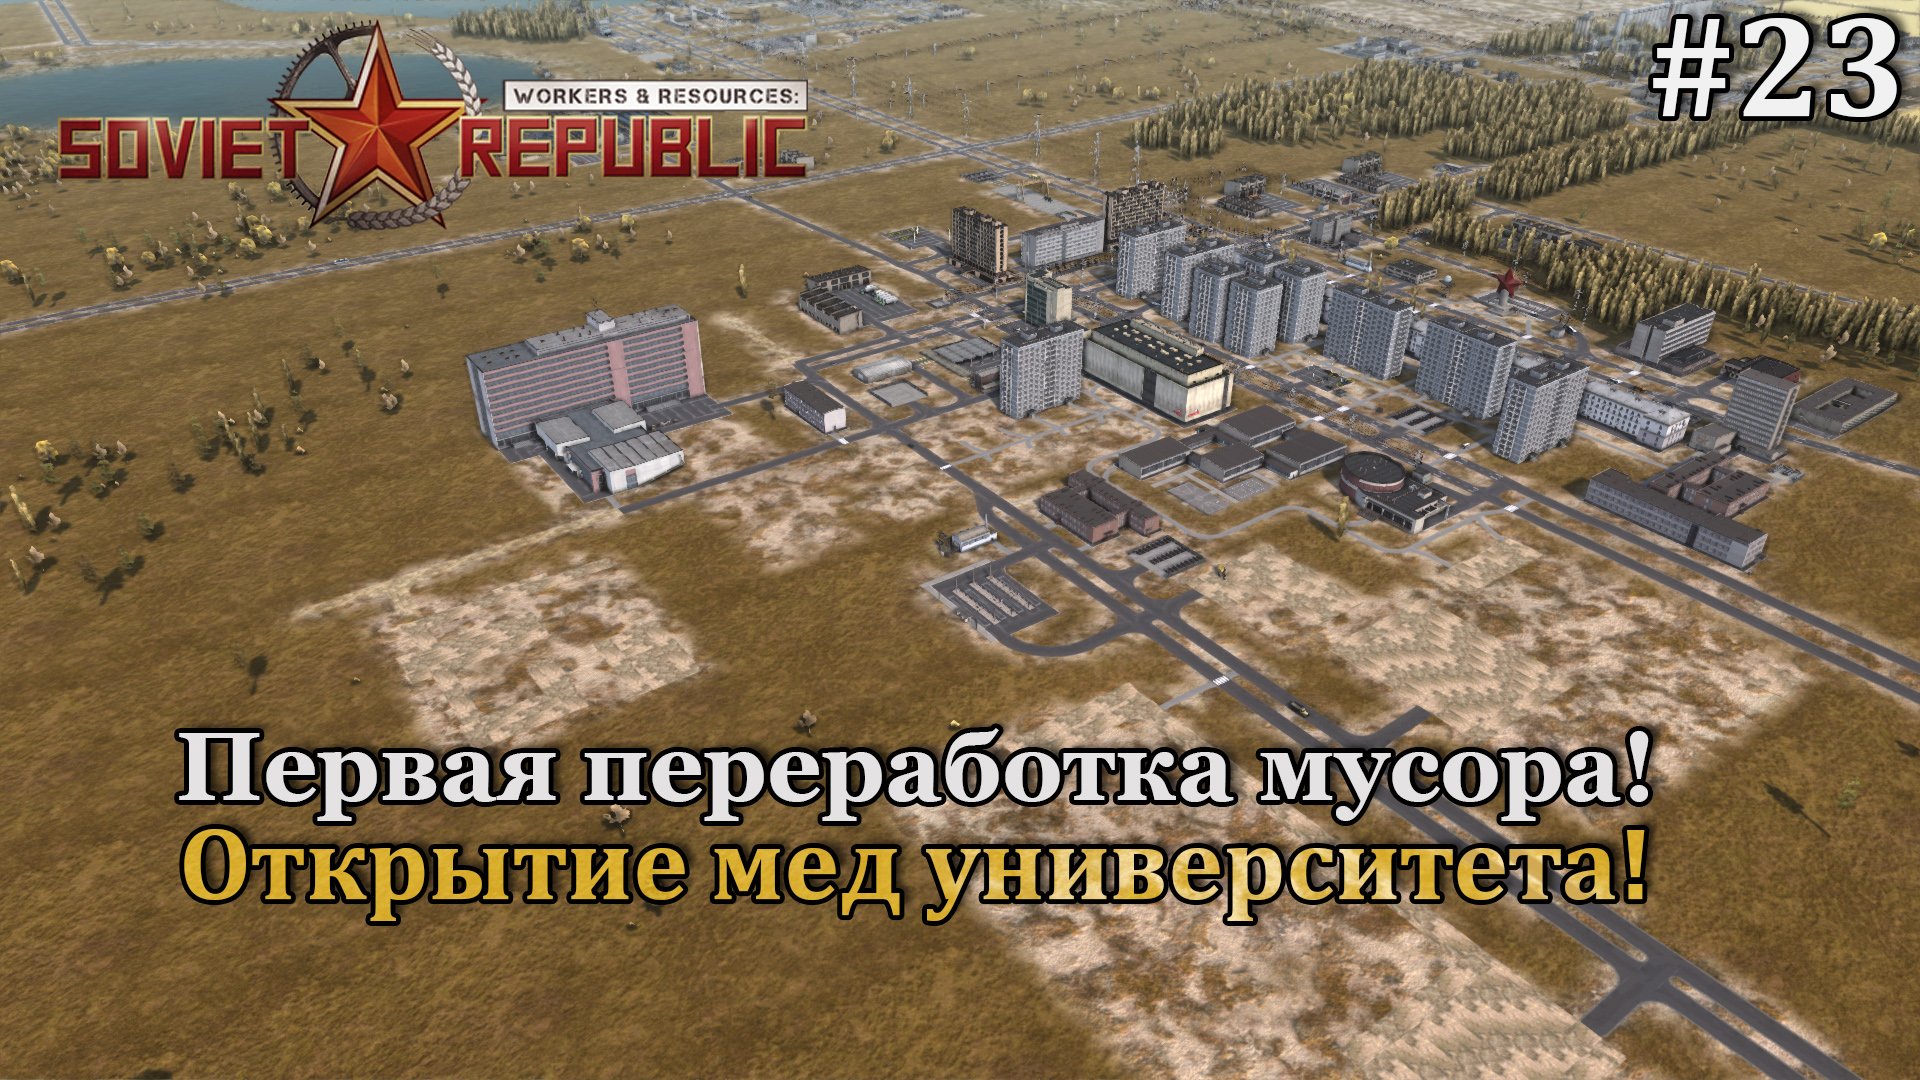 Workers & Resources: Soviet Republic Новая республика! #23